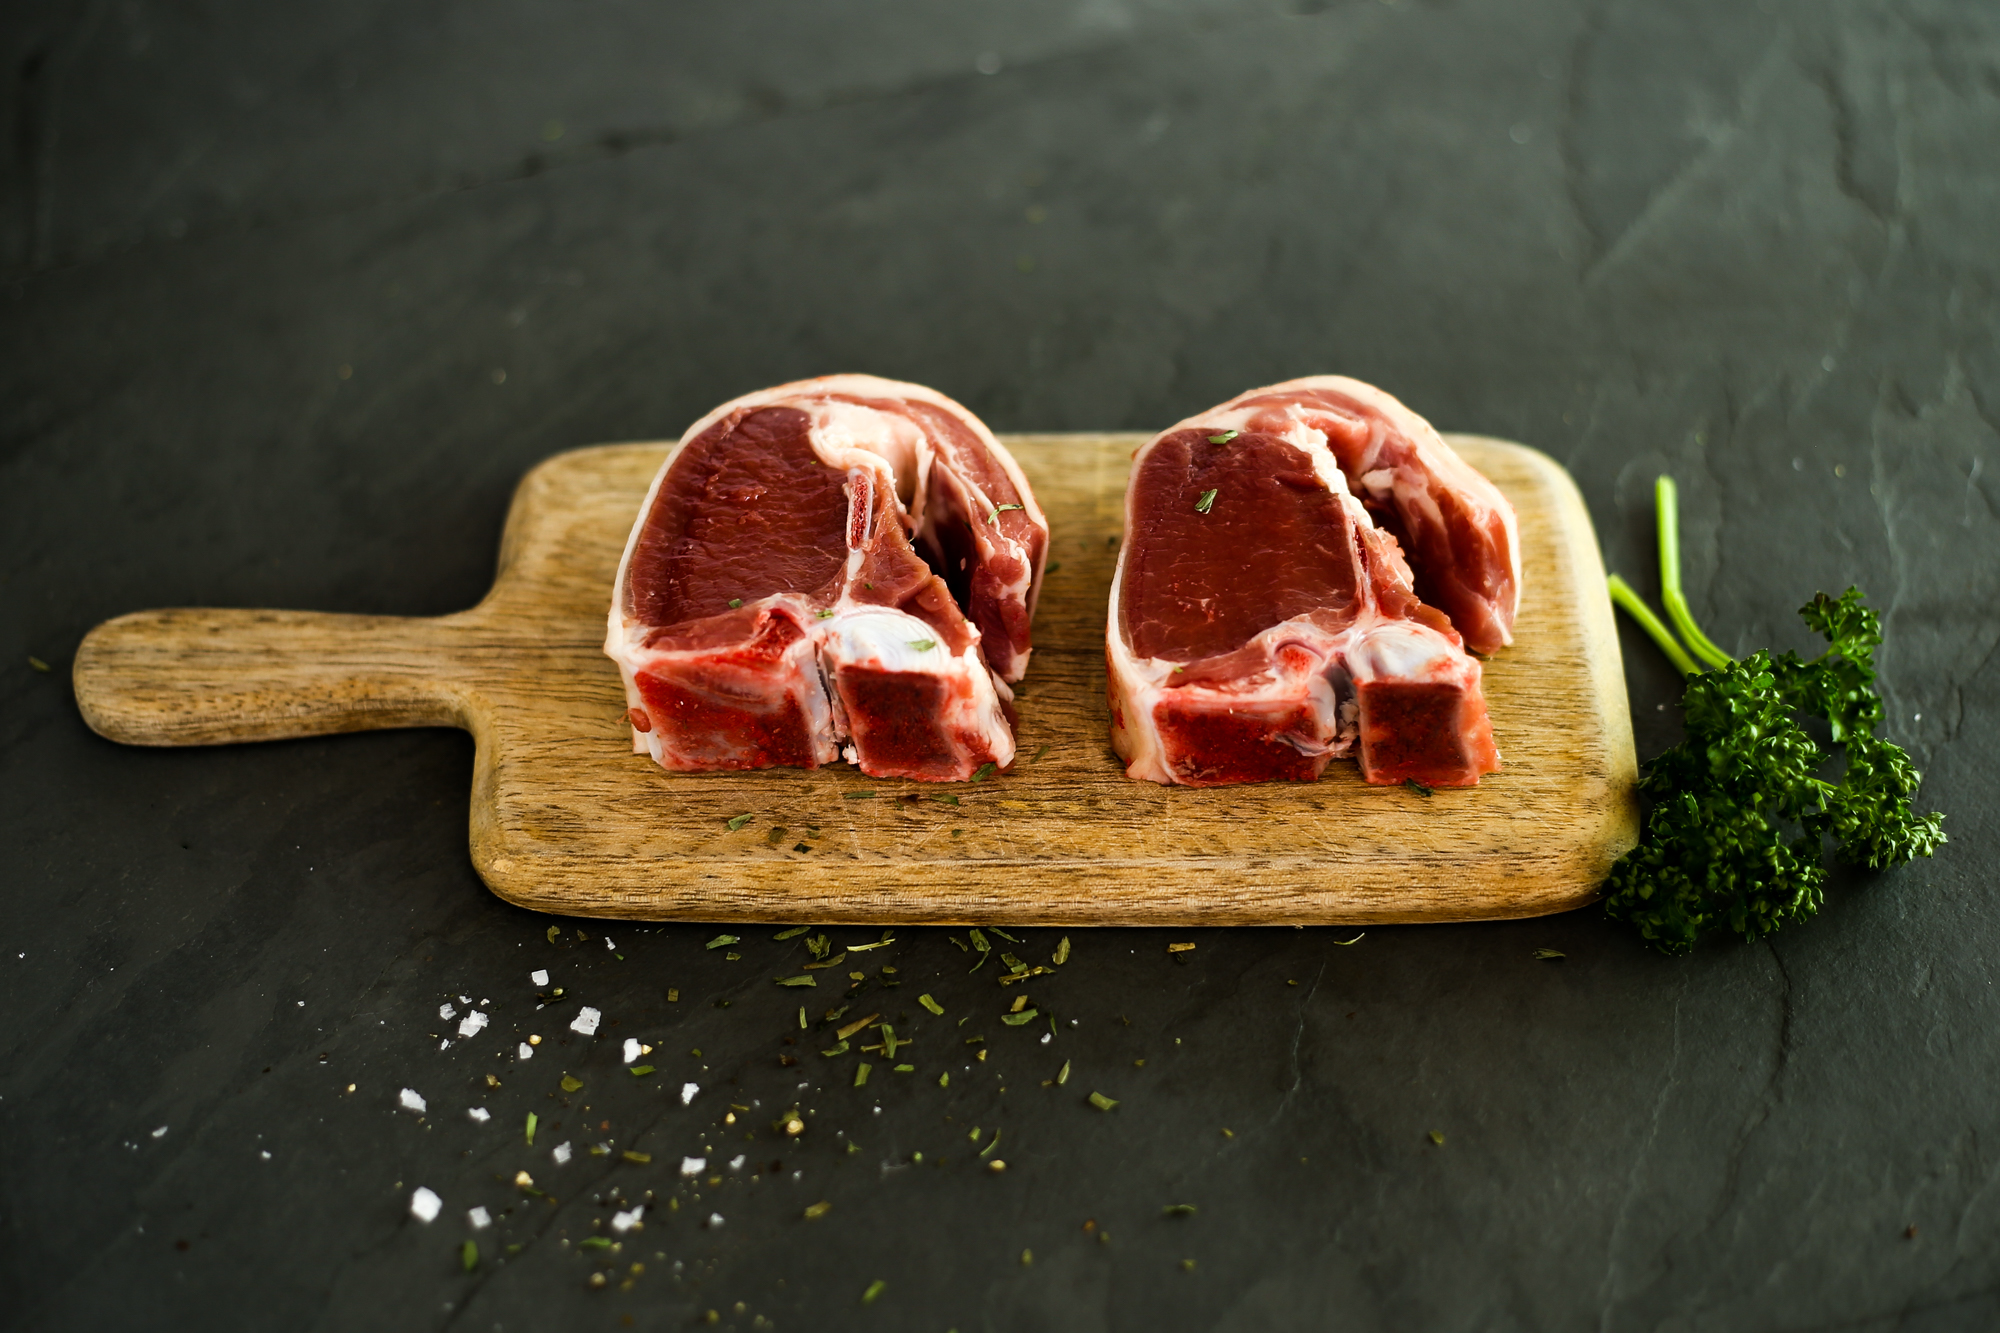 Lamb Chops & Steaks